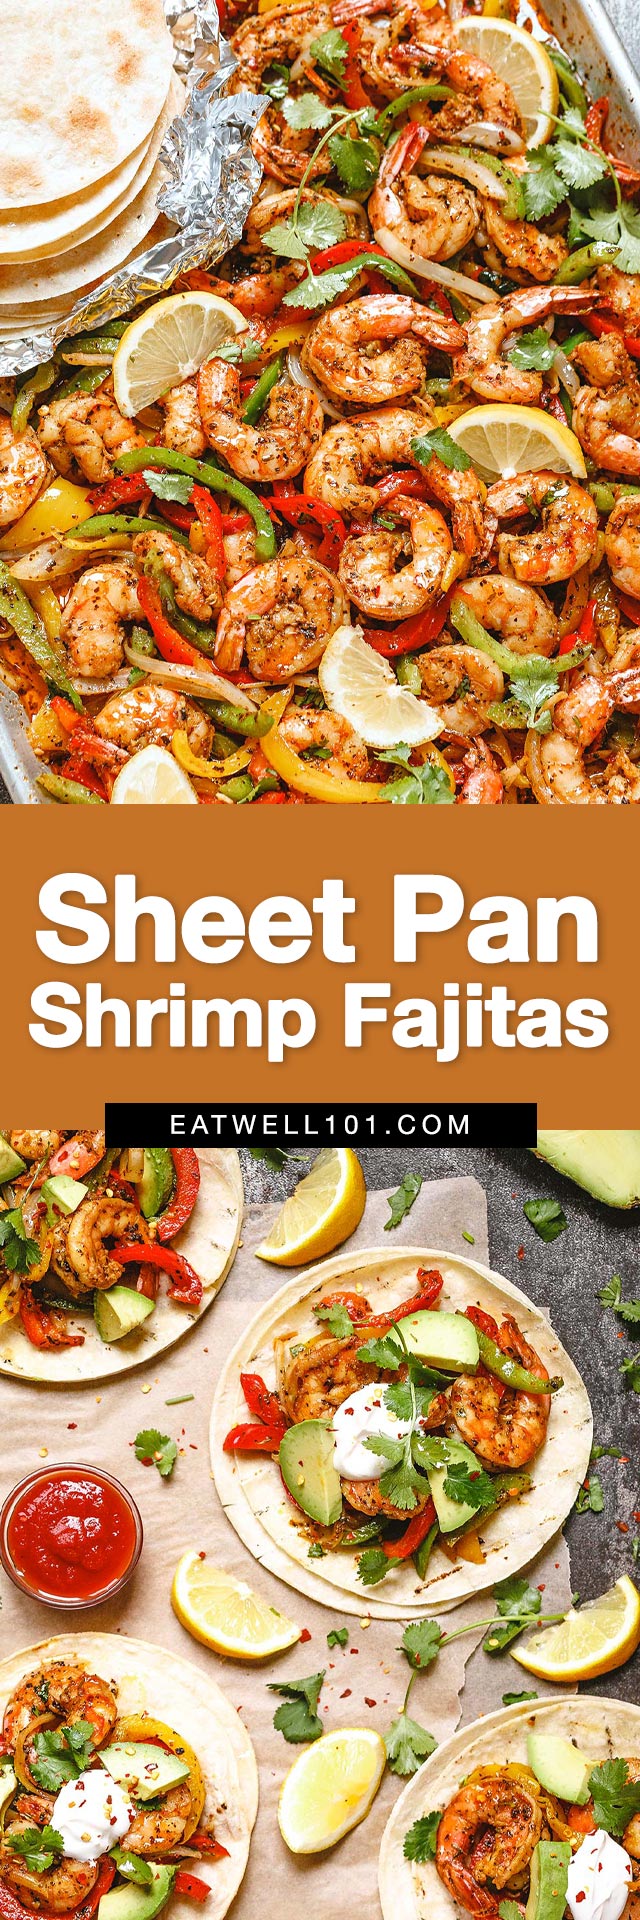 Sheet Pan Shrimp Fajitas - #shrimp #fajitas #recipe #eatwell101 - Sheet pan shrimp fajitas makes an easy weeknight dinner that tastes amazing. Make this baked shrimp fajita recipe once and you'll make it over and over!